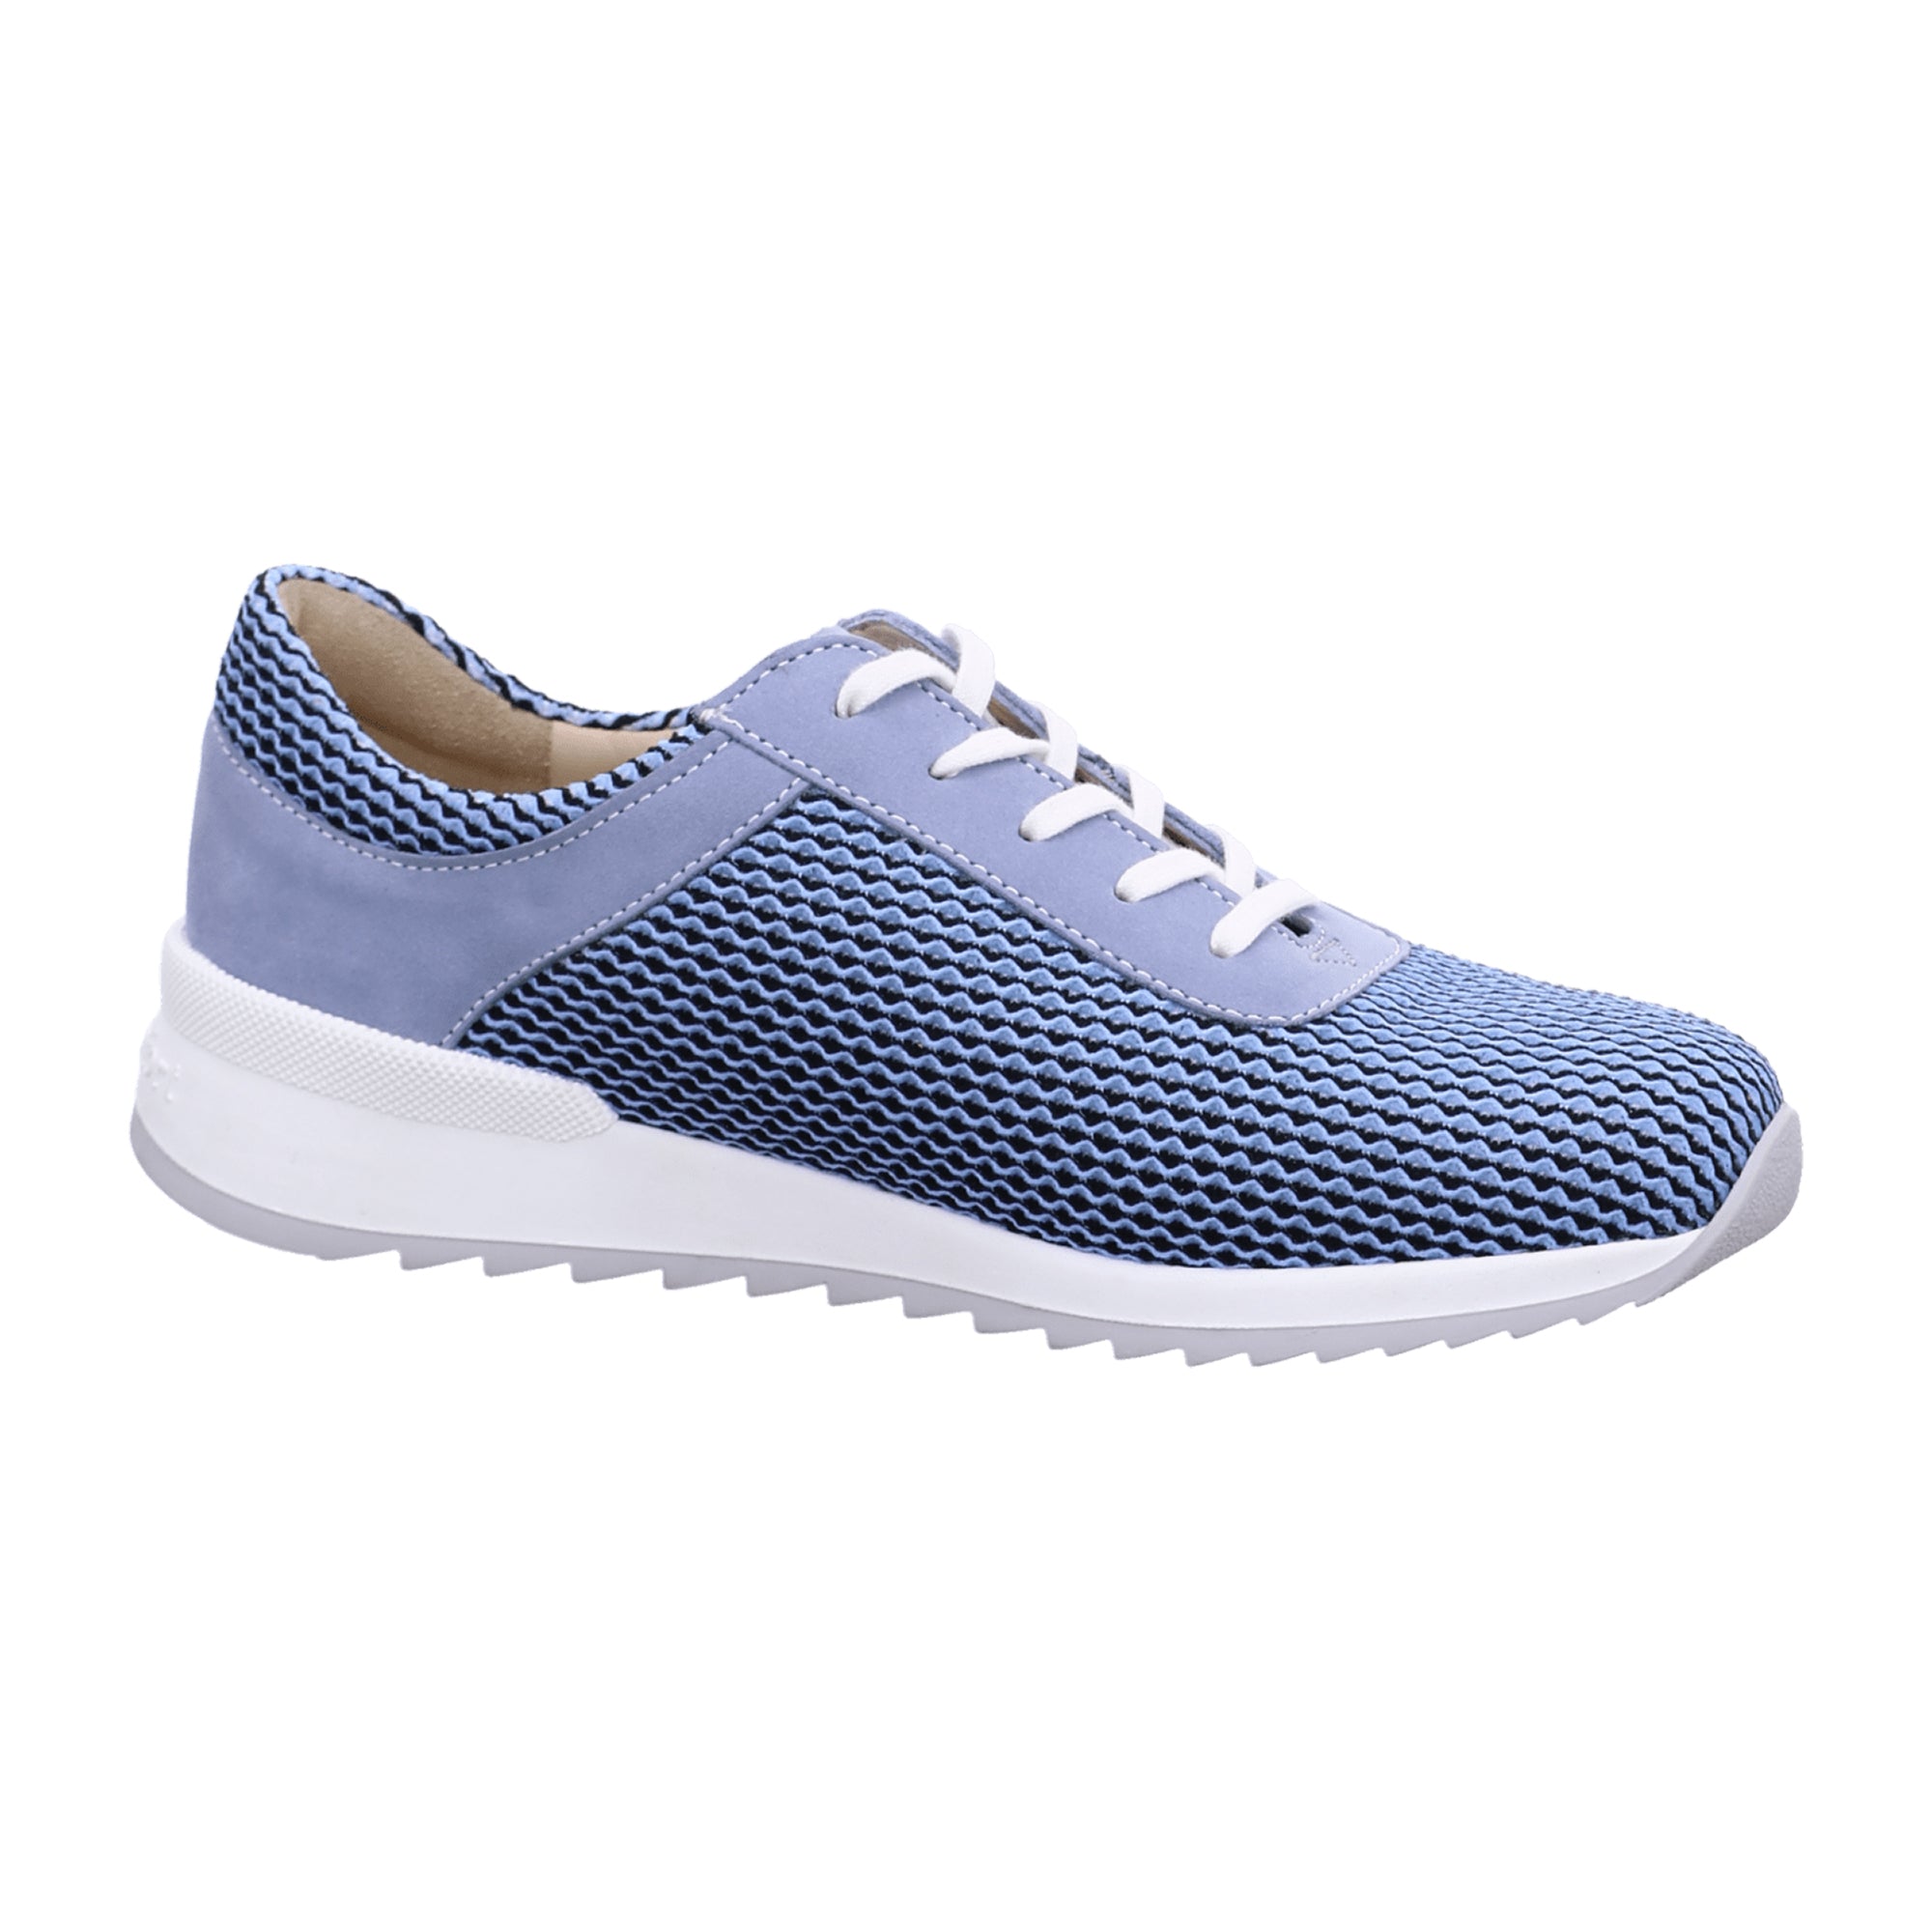 Finn Comfort Cerritos Women's Comfortable Blue Sneakers - Stylish & Durable